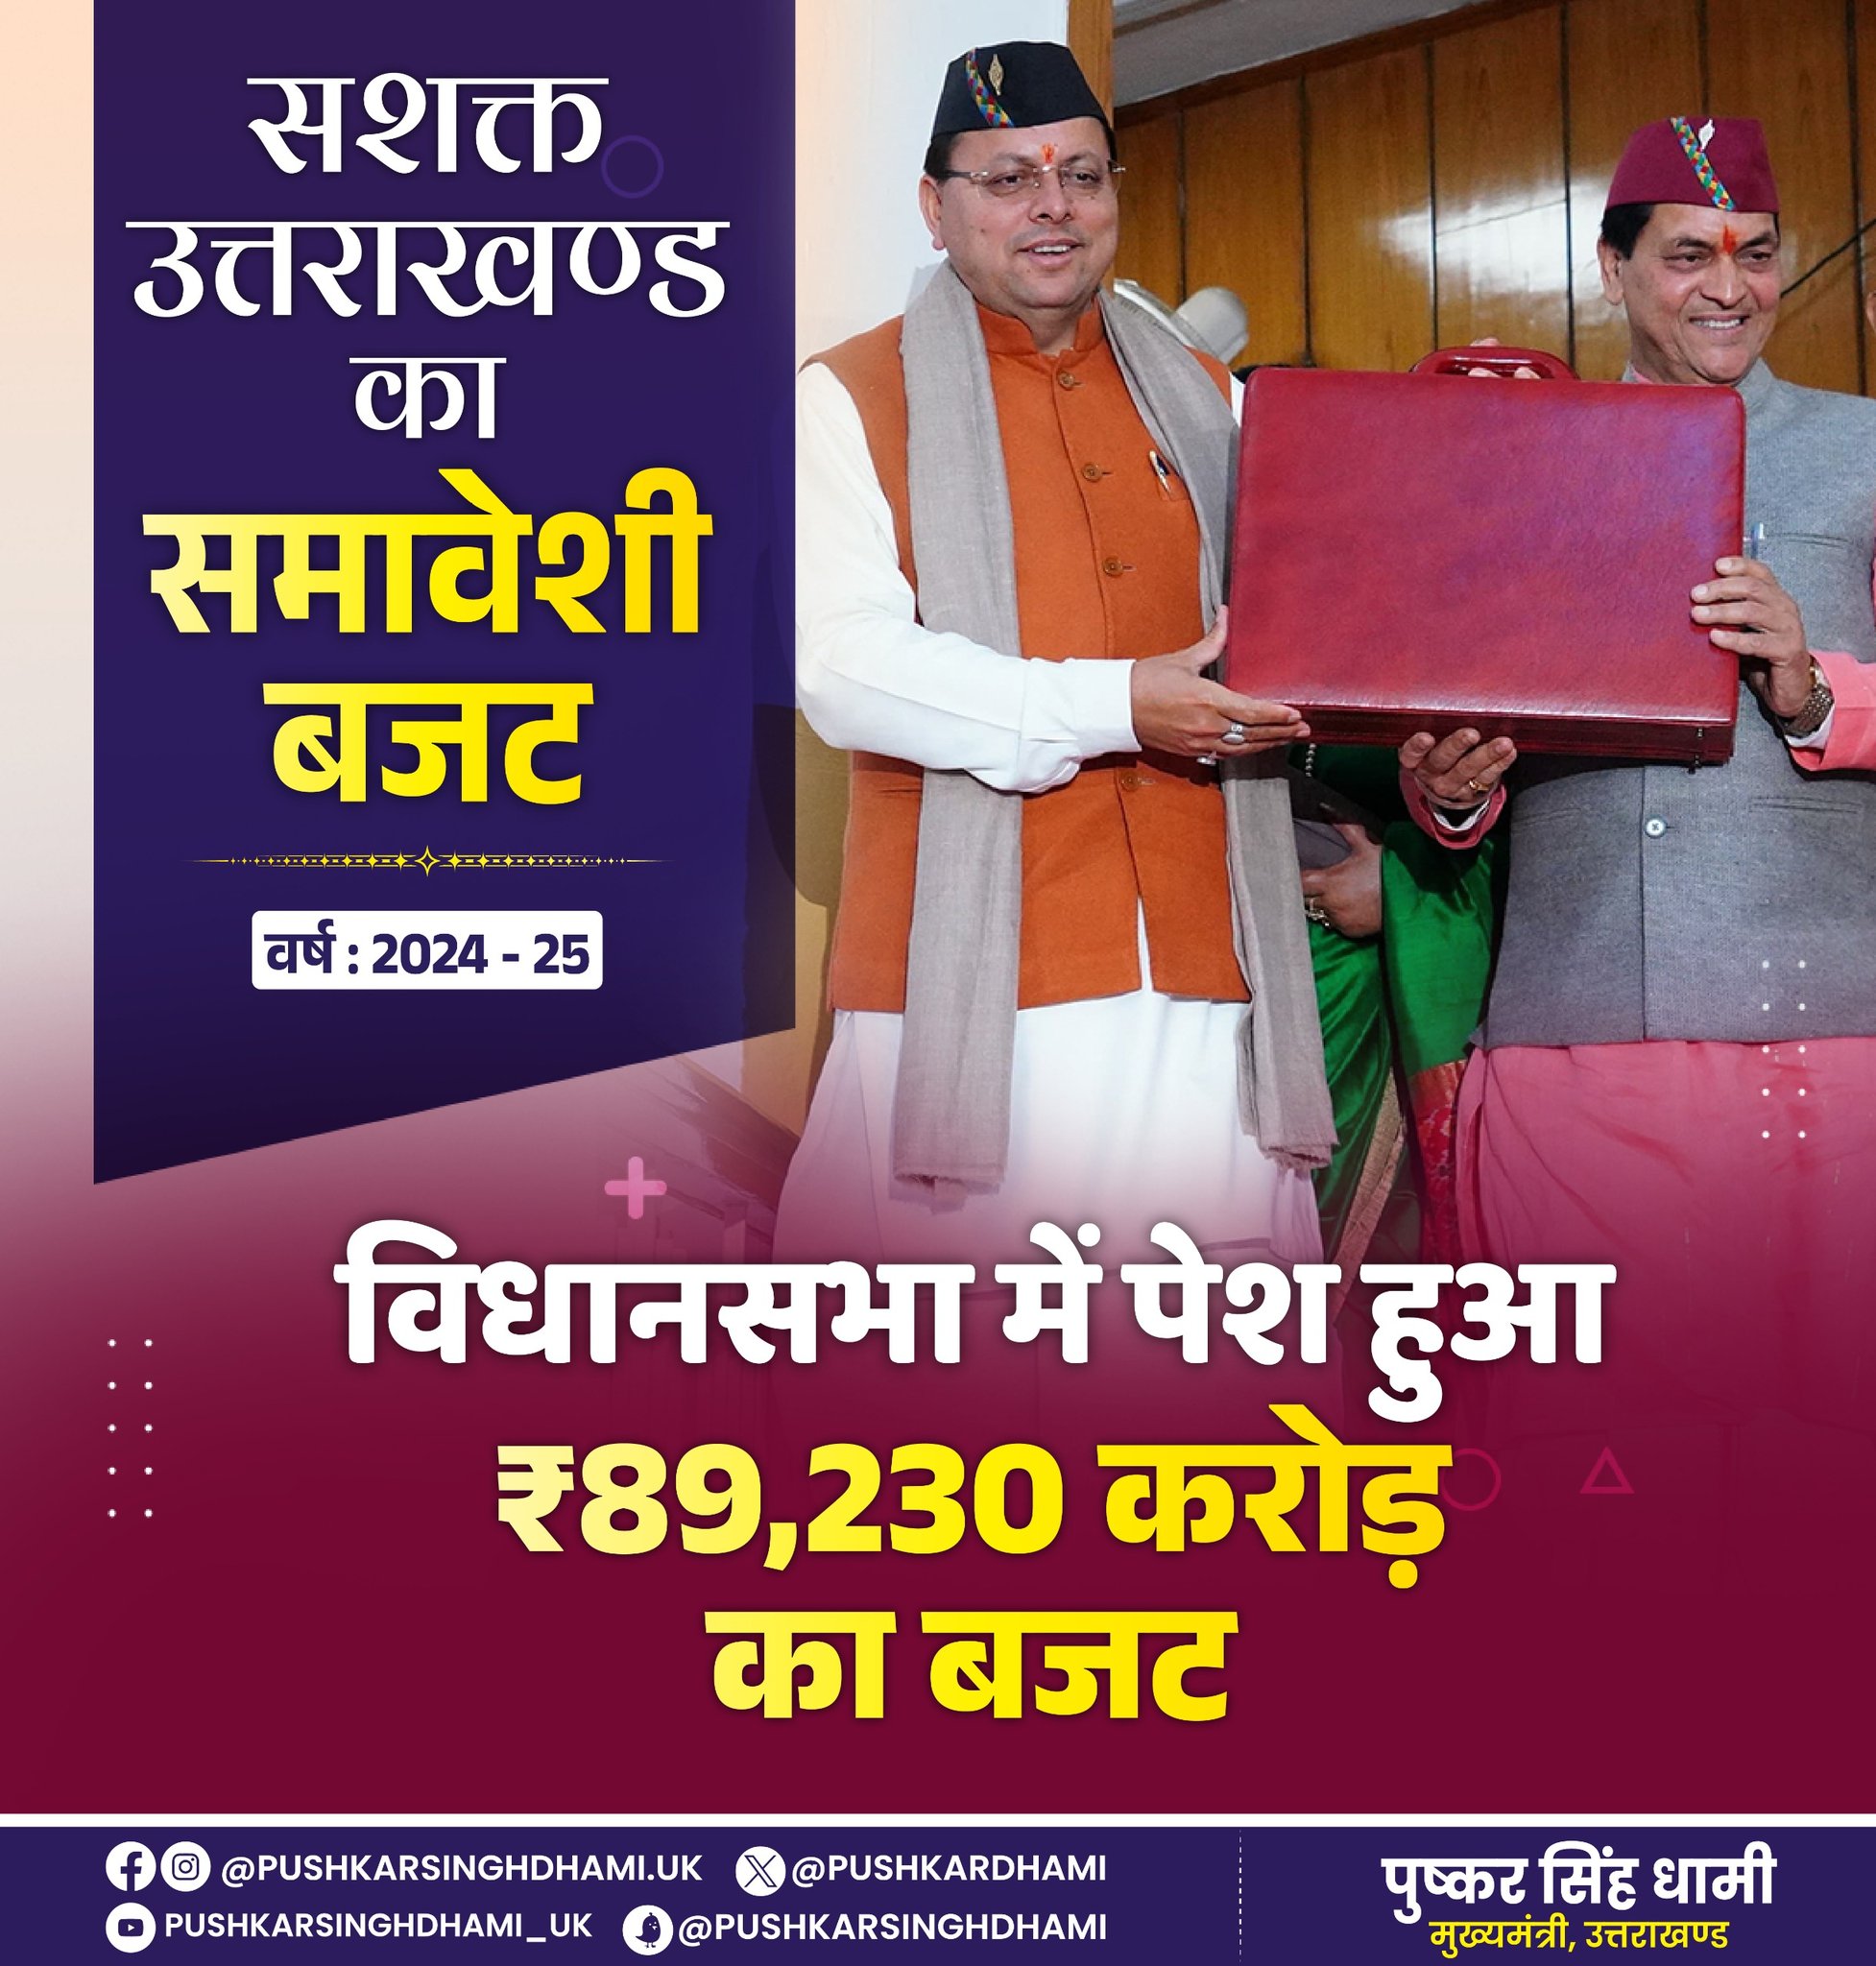 Main Highlights of Uttarakhand Budget 2024